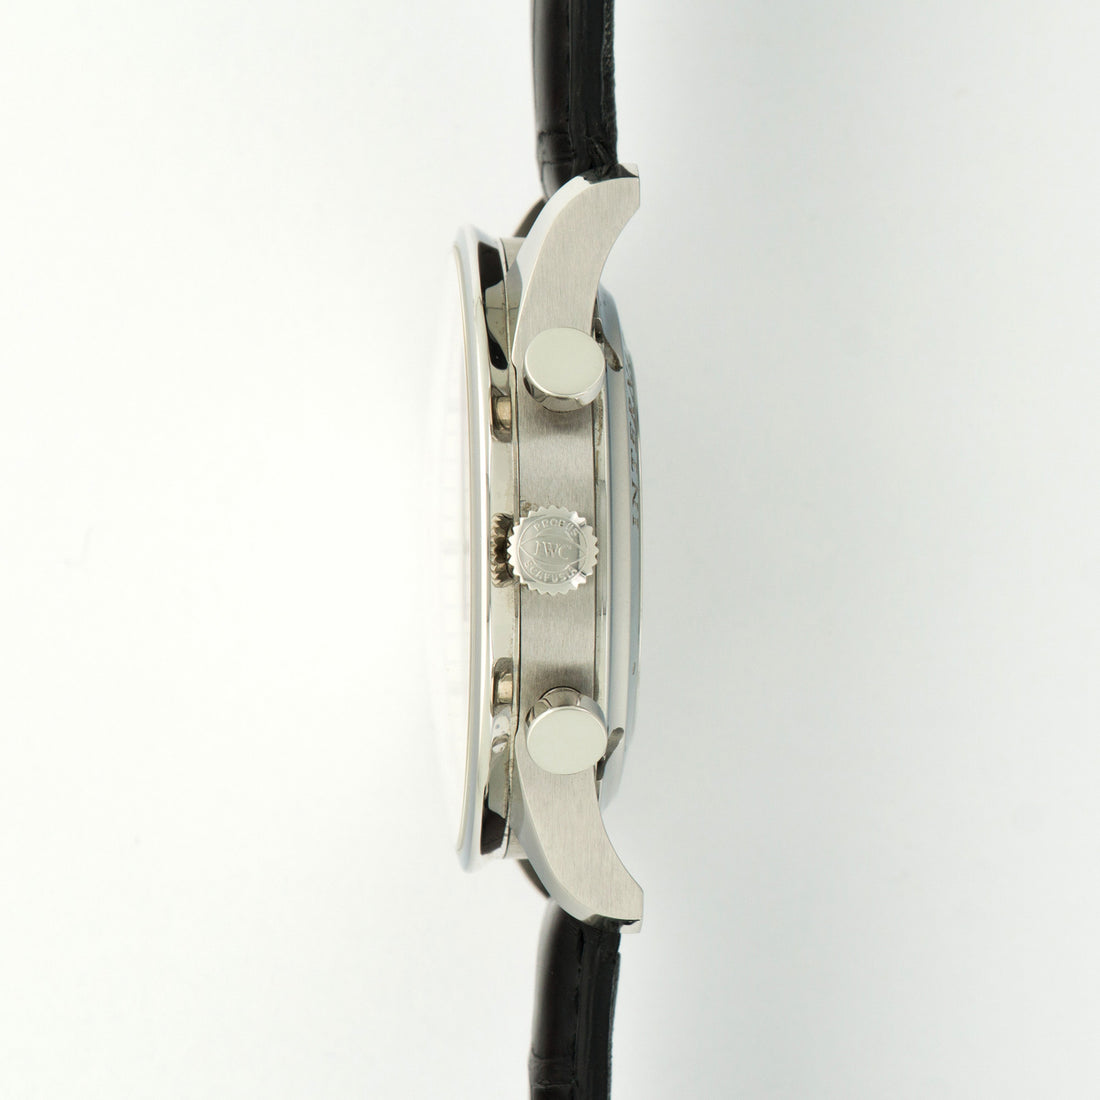 IWC Steel Portuguese Chronographon Strap Watch Ref. 3714